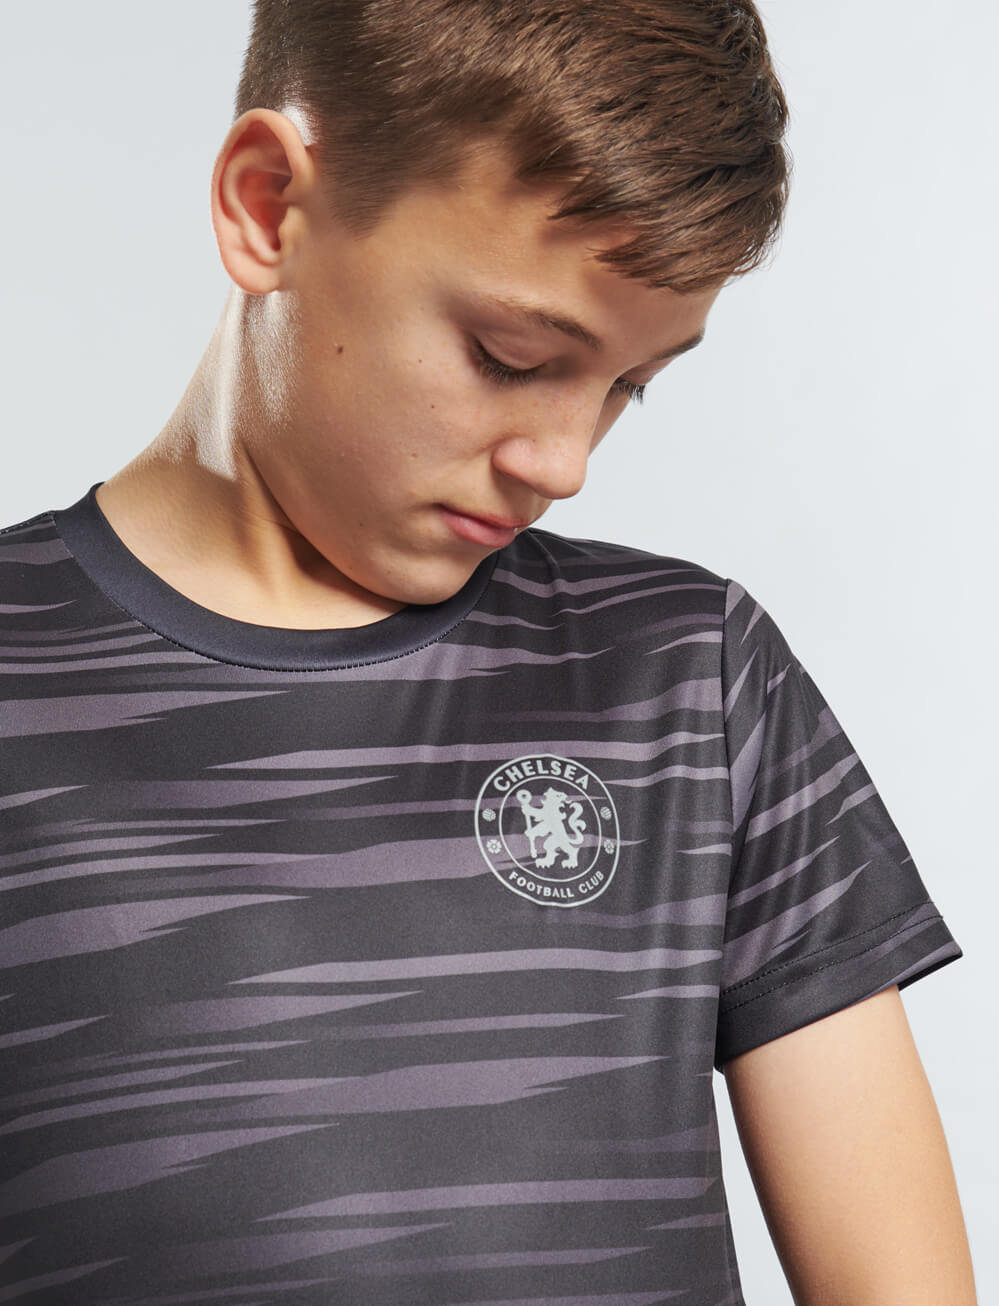 Official Chelsea Kids T-Shirt - Black - The World Football Store